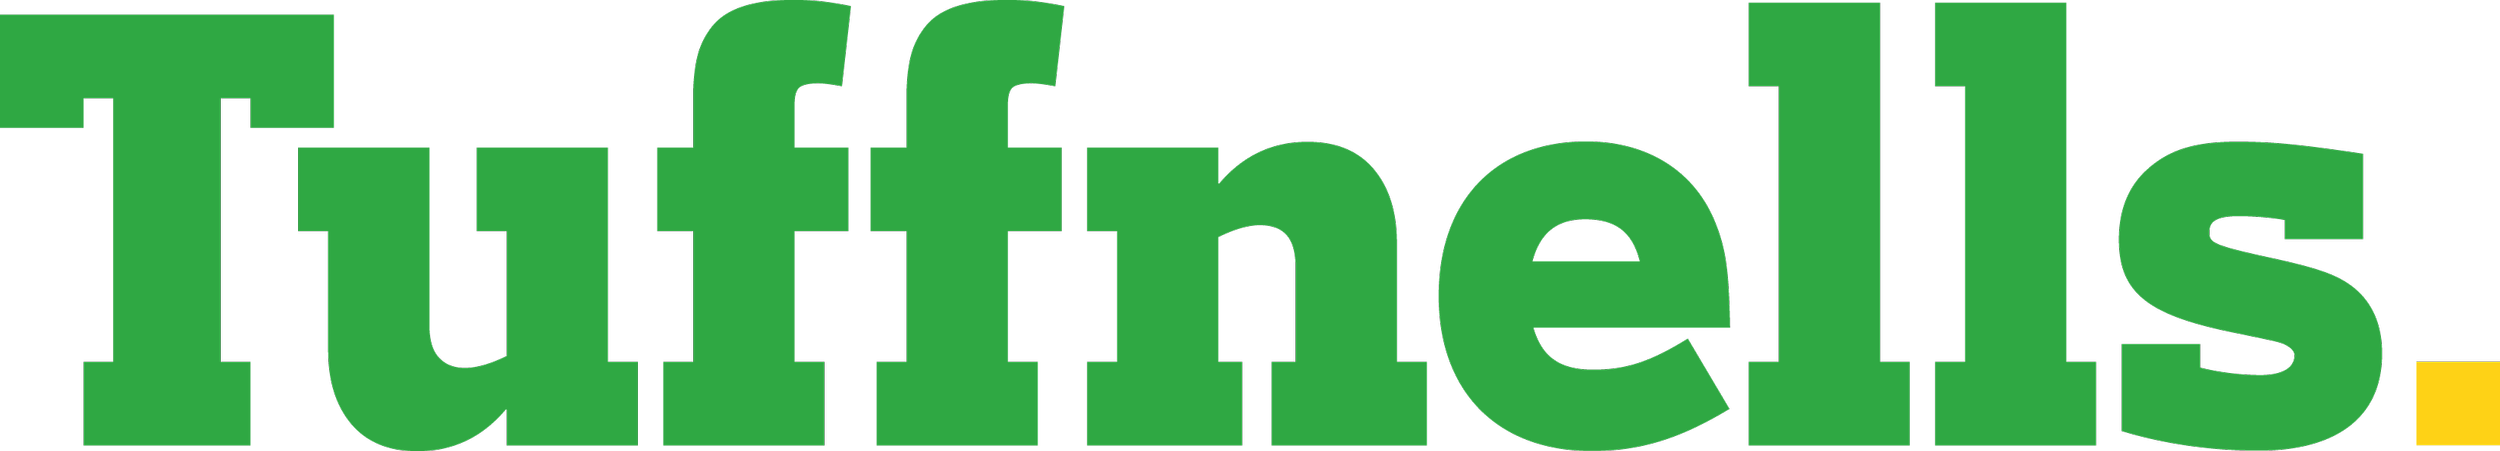 2018-Tuffnells-Logo-GreenYellow-RGB-1.png